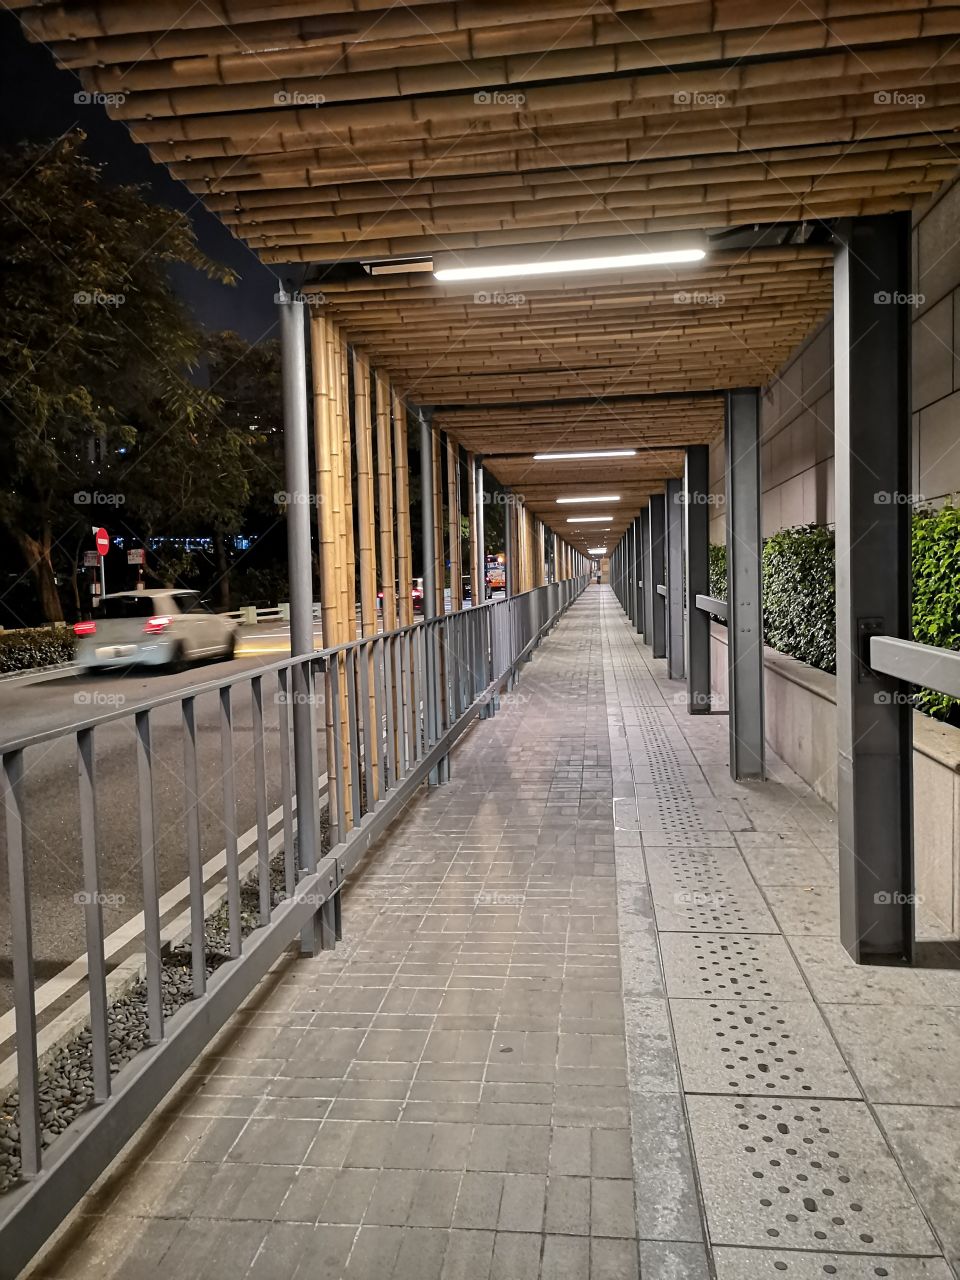 The Street Corridor at Night